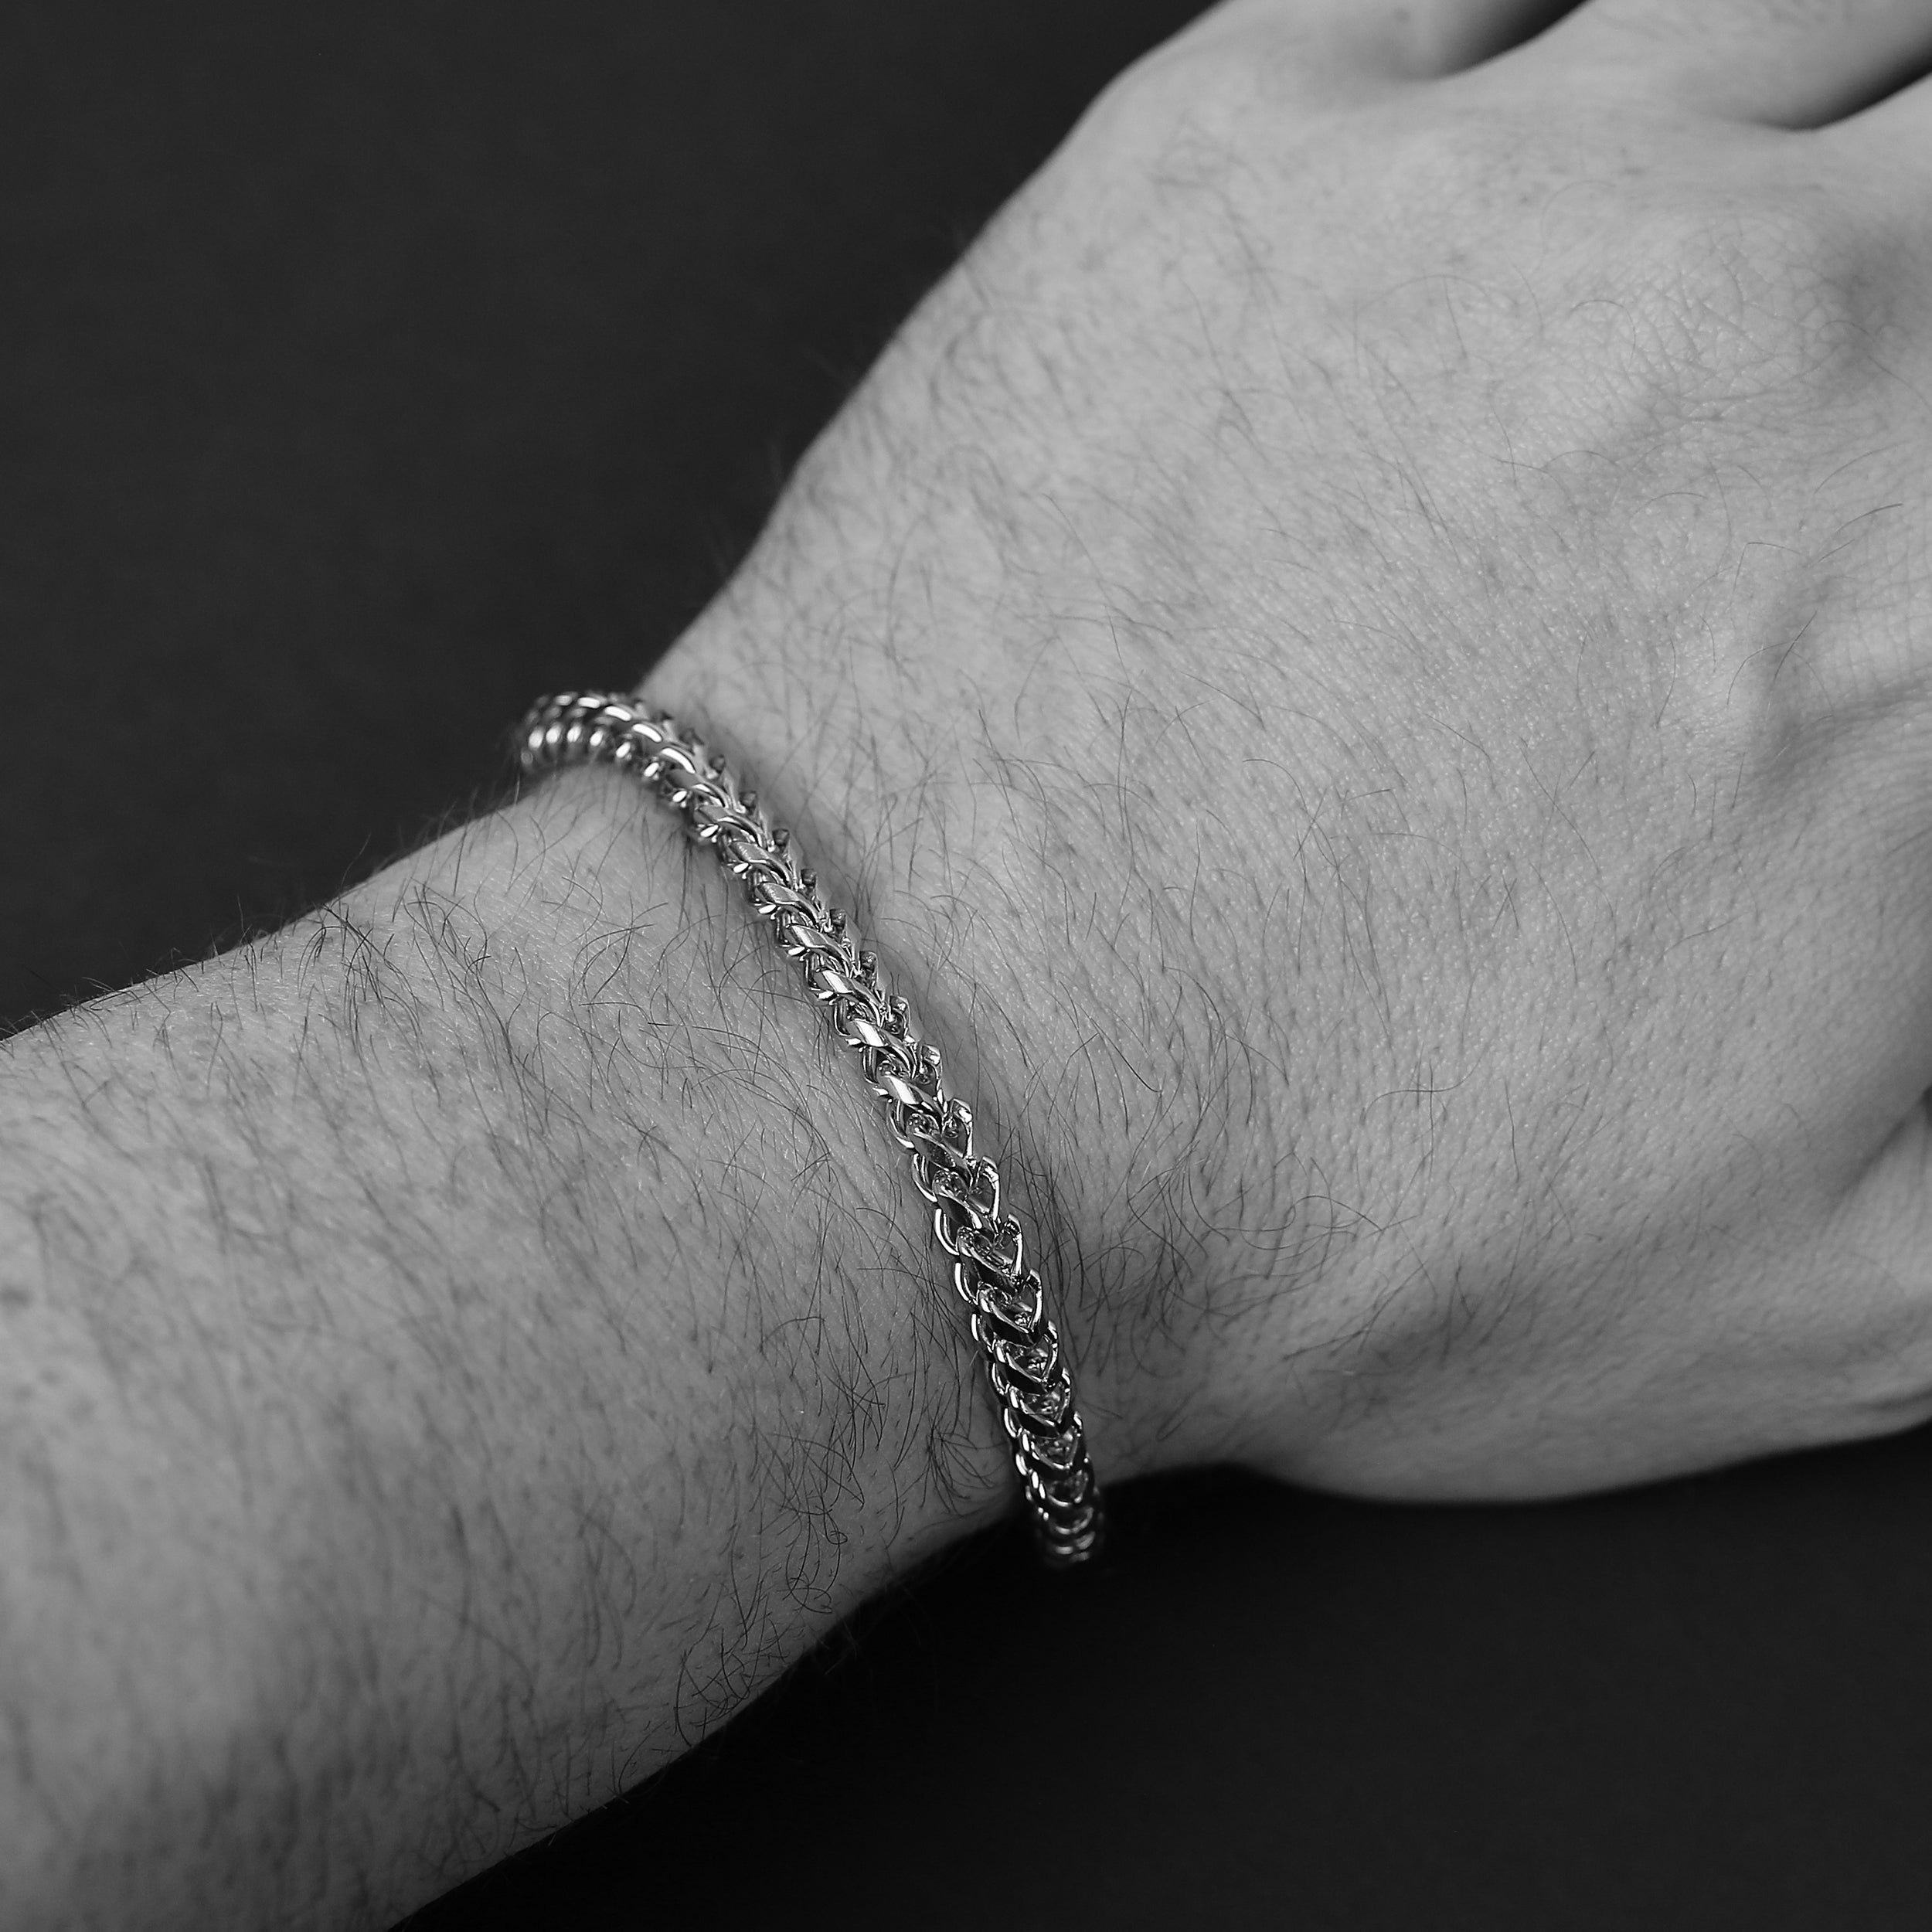 Franco Chain Bracelet - Silver 5mm